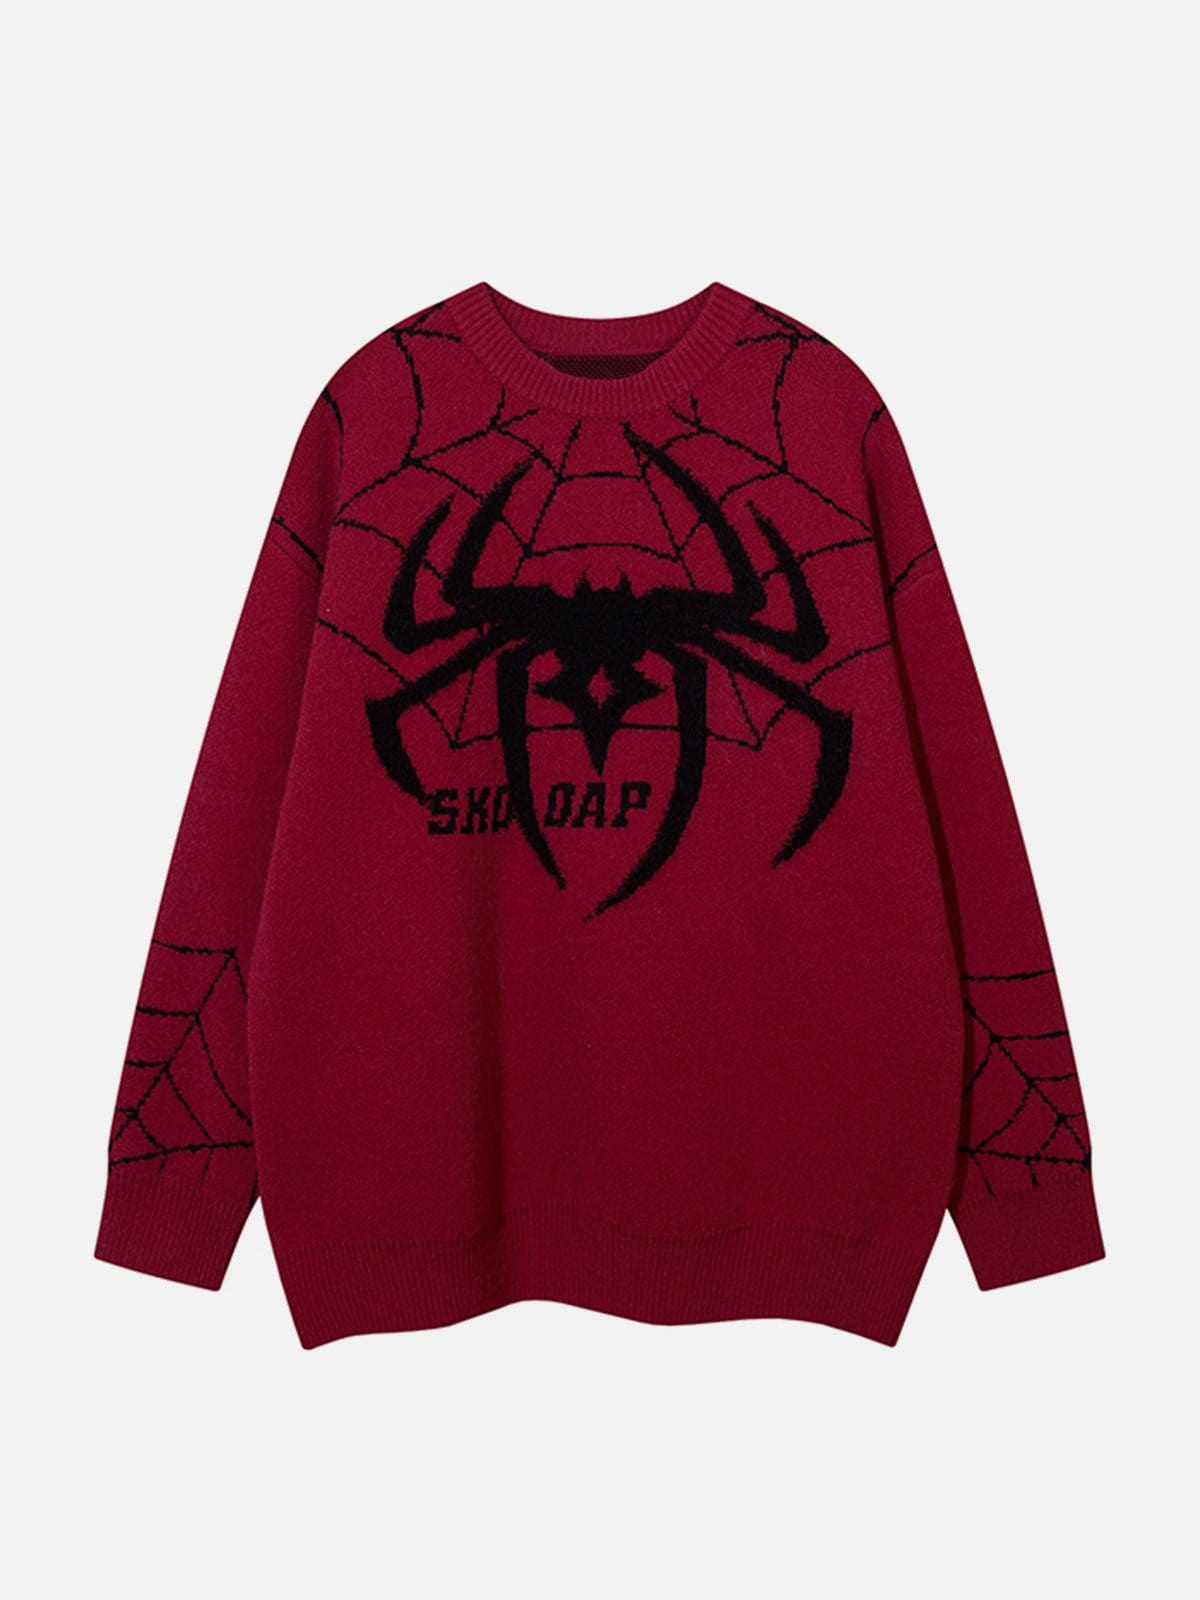 NEV Spider Web Jacquard Sweaters